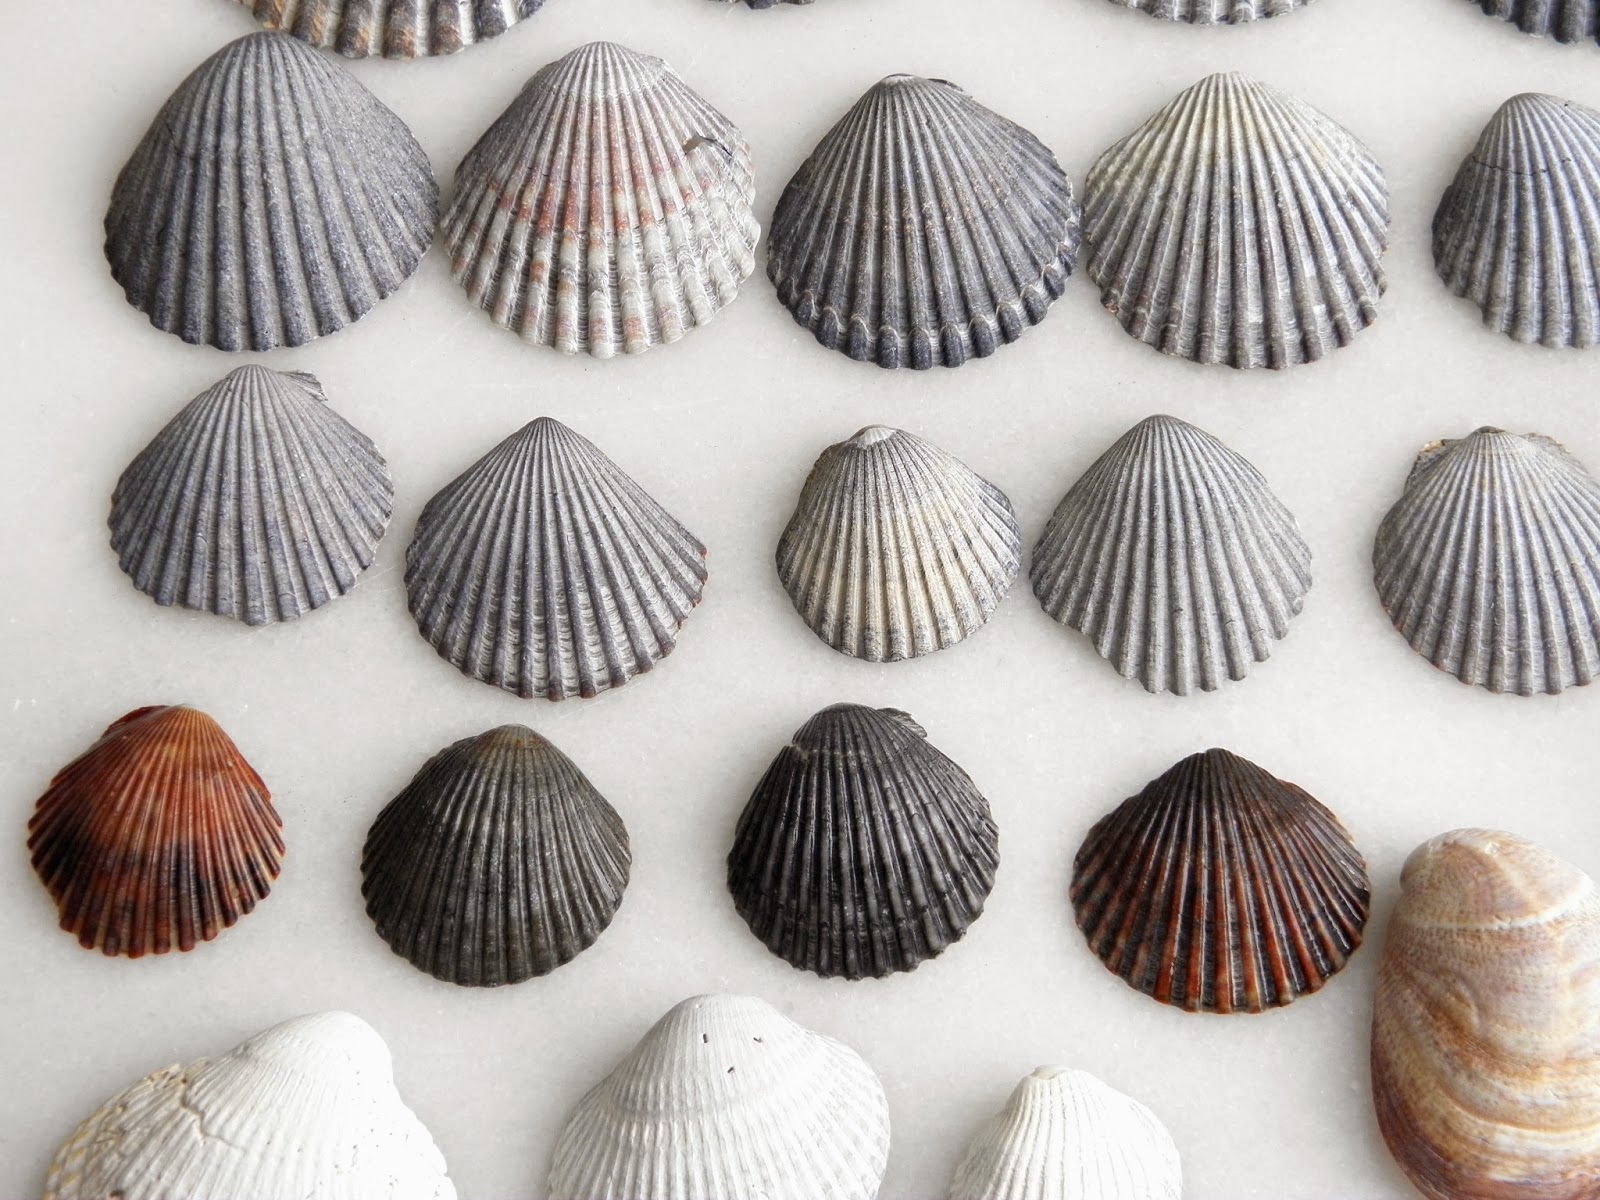 Good Things by David: Collecting Seashells